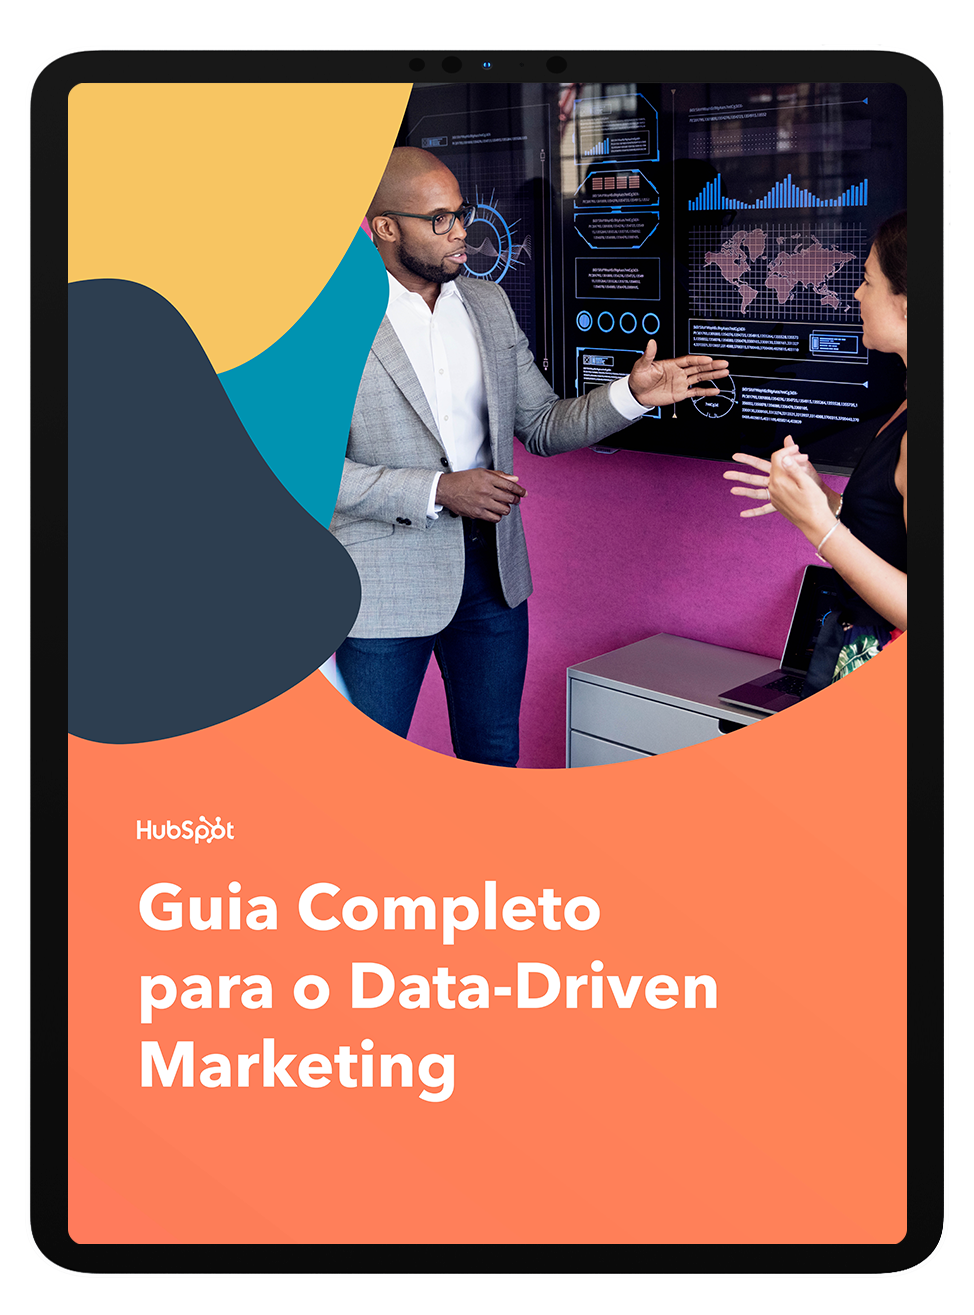 Mockup_Guia Completo para o Data-Driven Marketing.